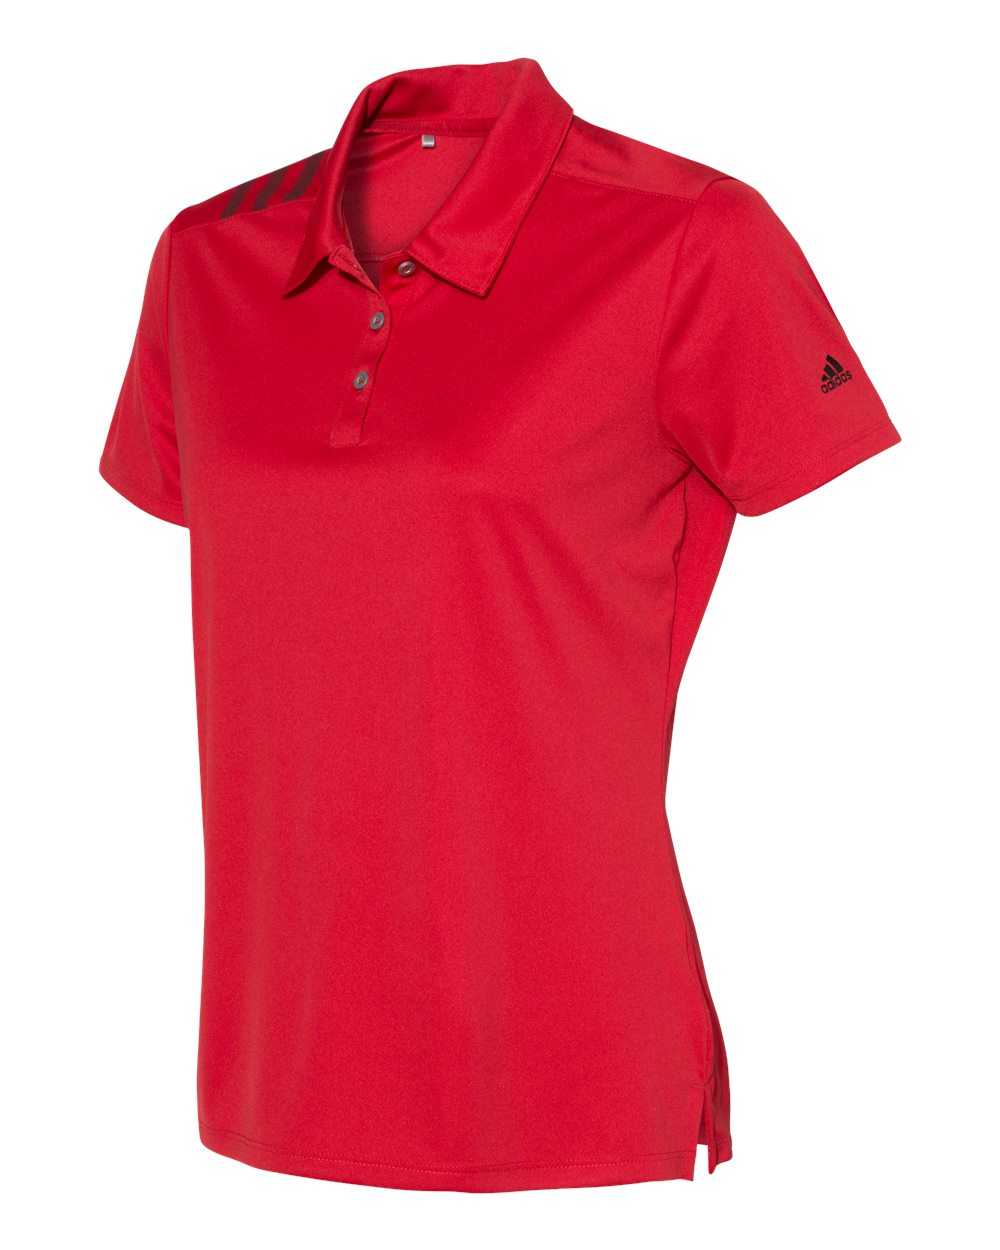 Adidas A325 Women's 3-Stripes Shoulder Sport Shirt - Collegiate Red Black - HIT a Double